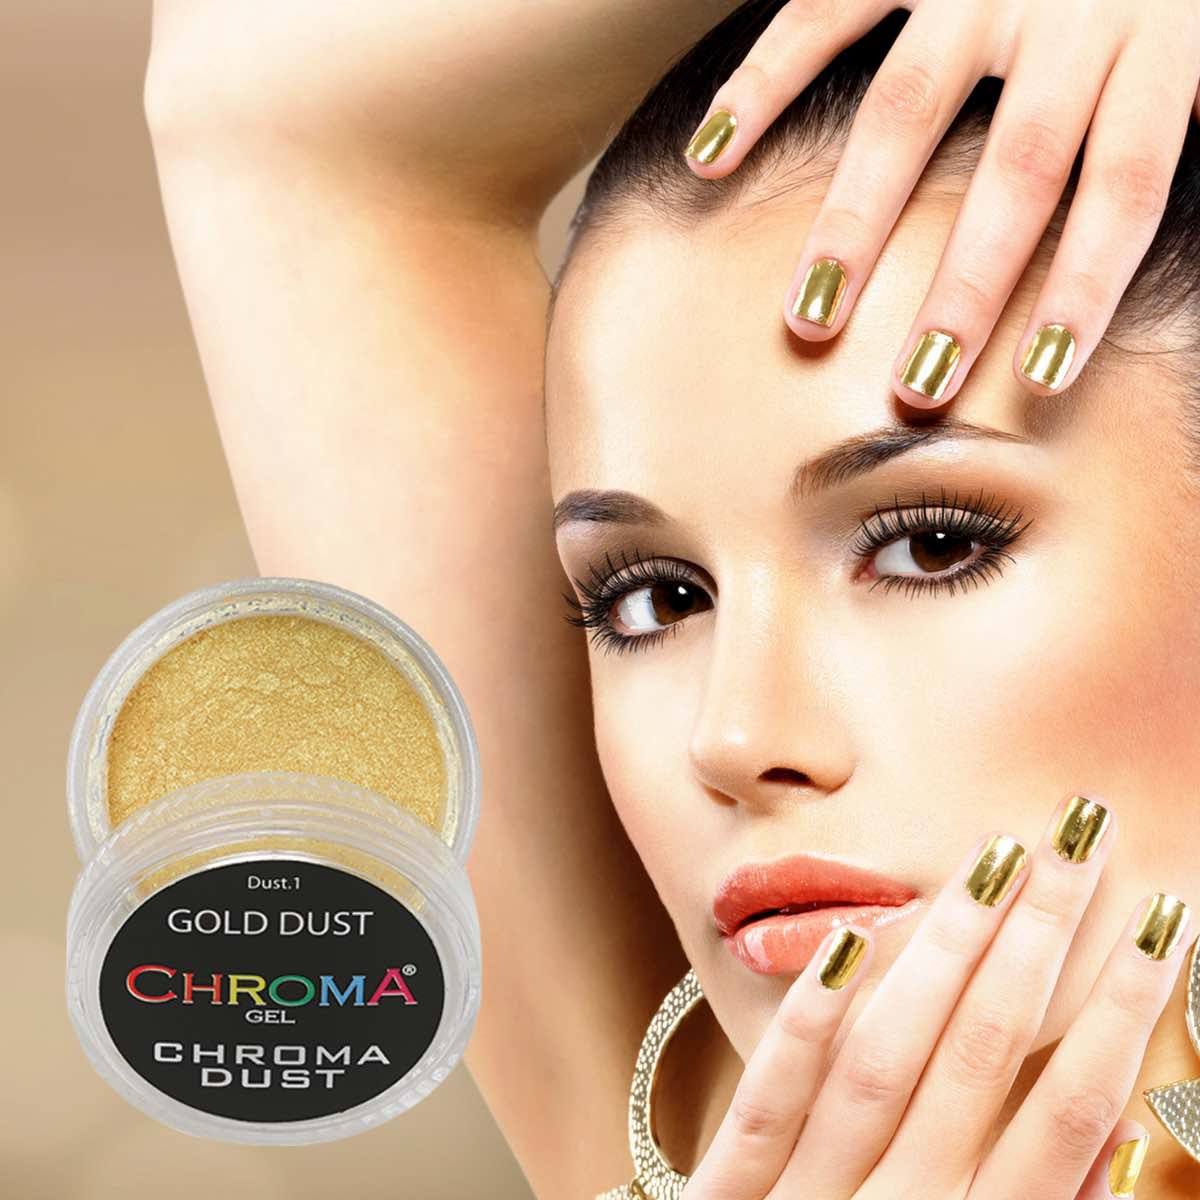 Chroma Dust No.1 Gold Dust Chrome Powder - Mirror Nails 2g - Beauty Hair Products Ltd